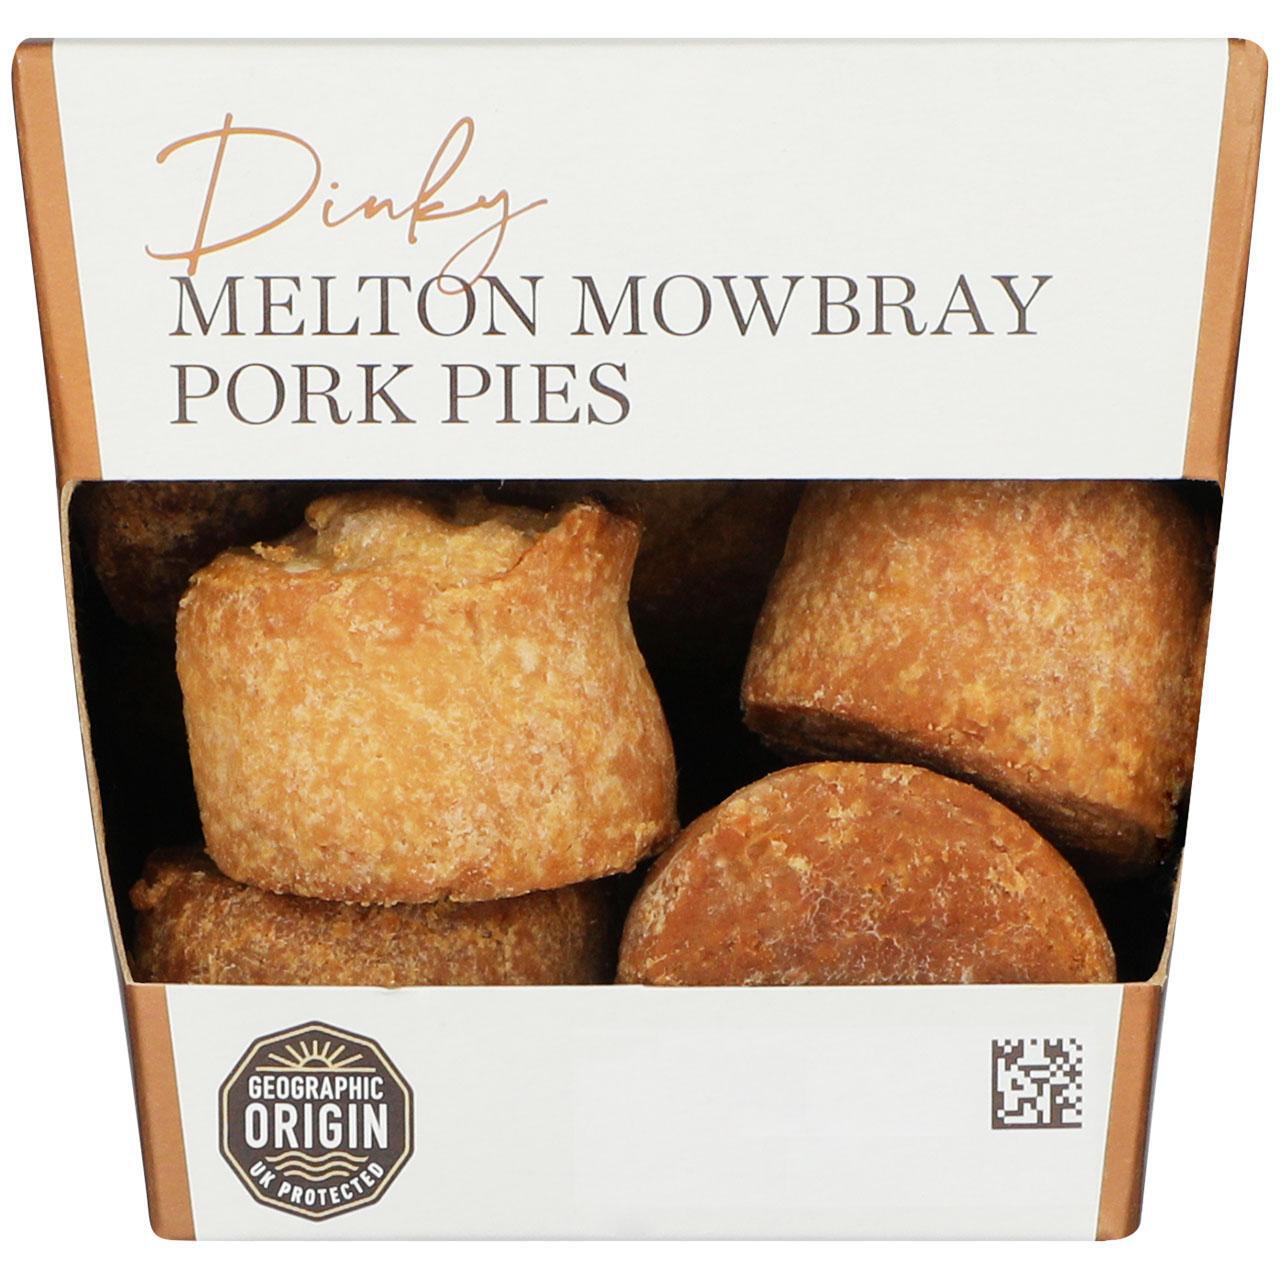 M&S 10 Dinky British Melton Mowbray Pork Pies 250g